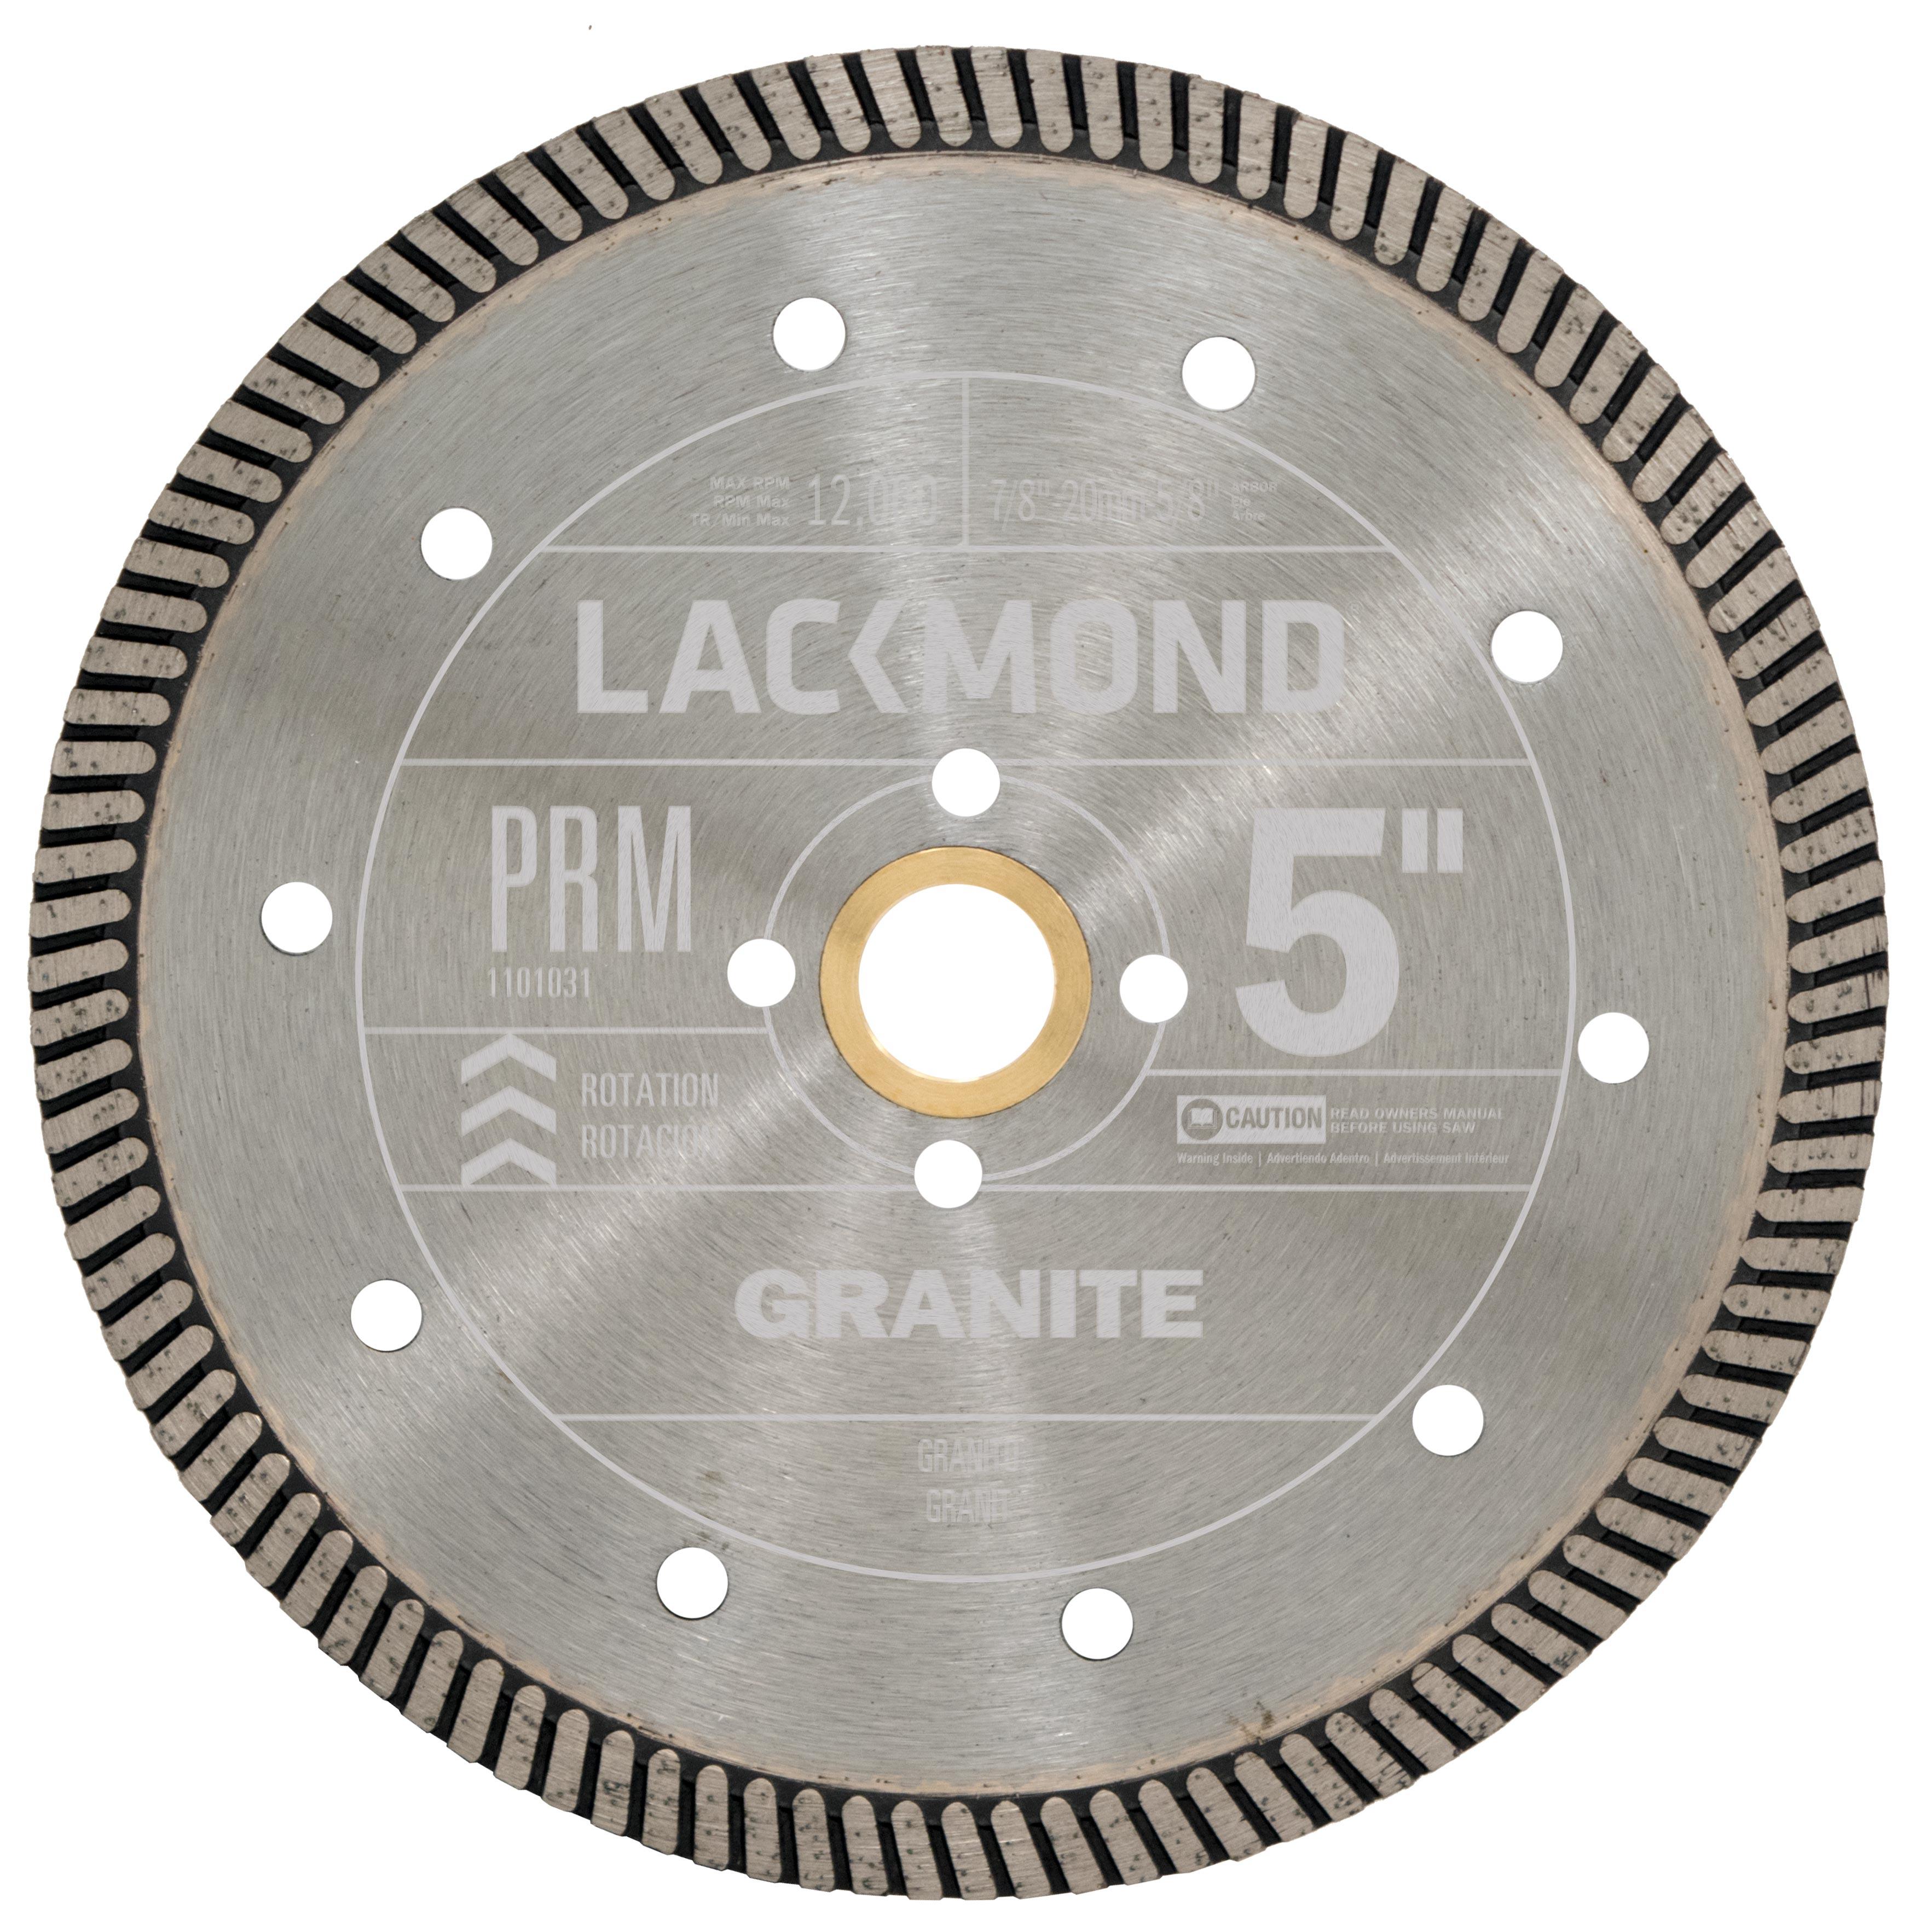 Lackmond PRM Granite Blade (LR) 7-15.jpg